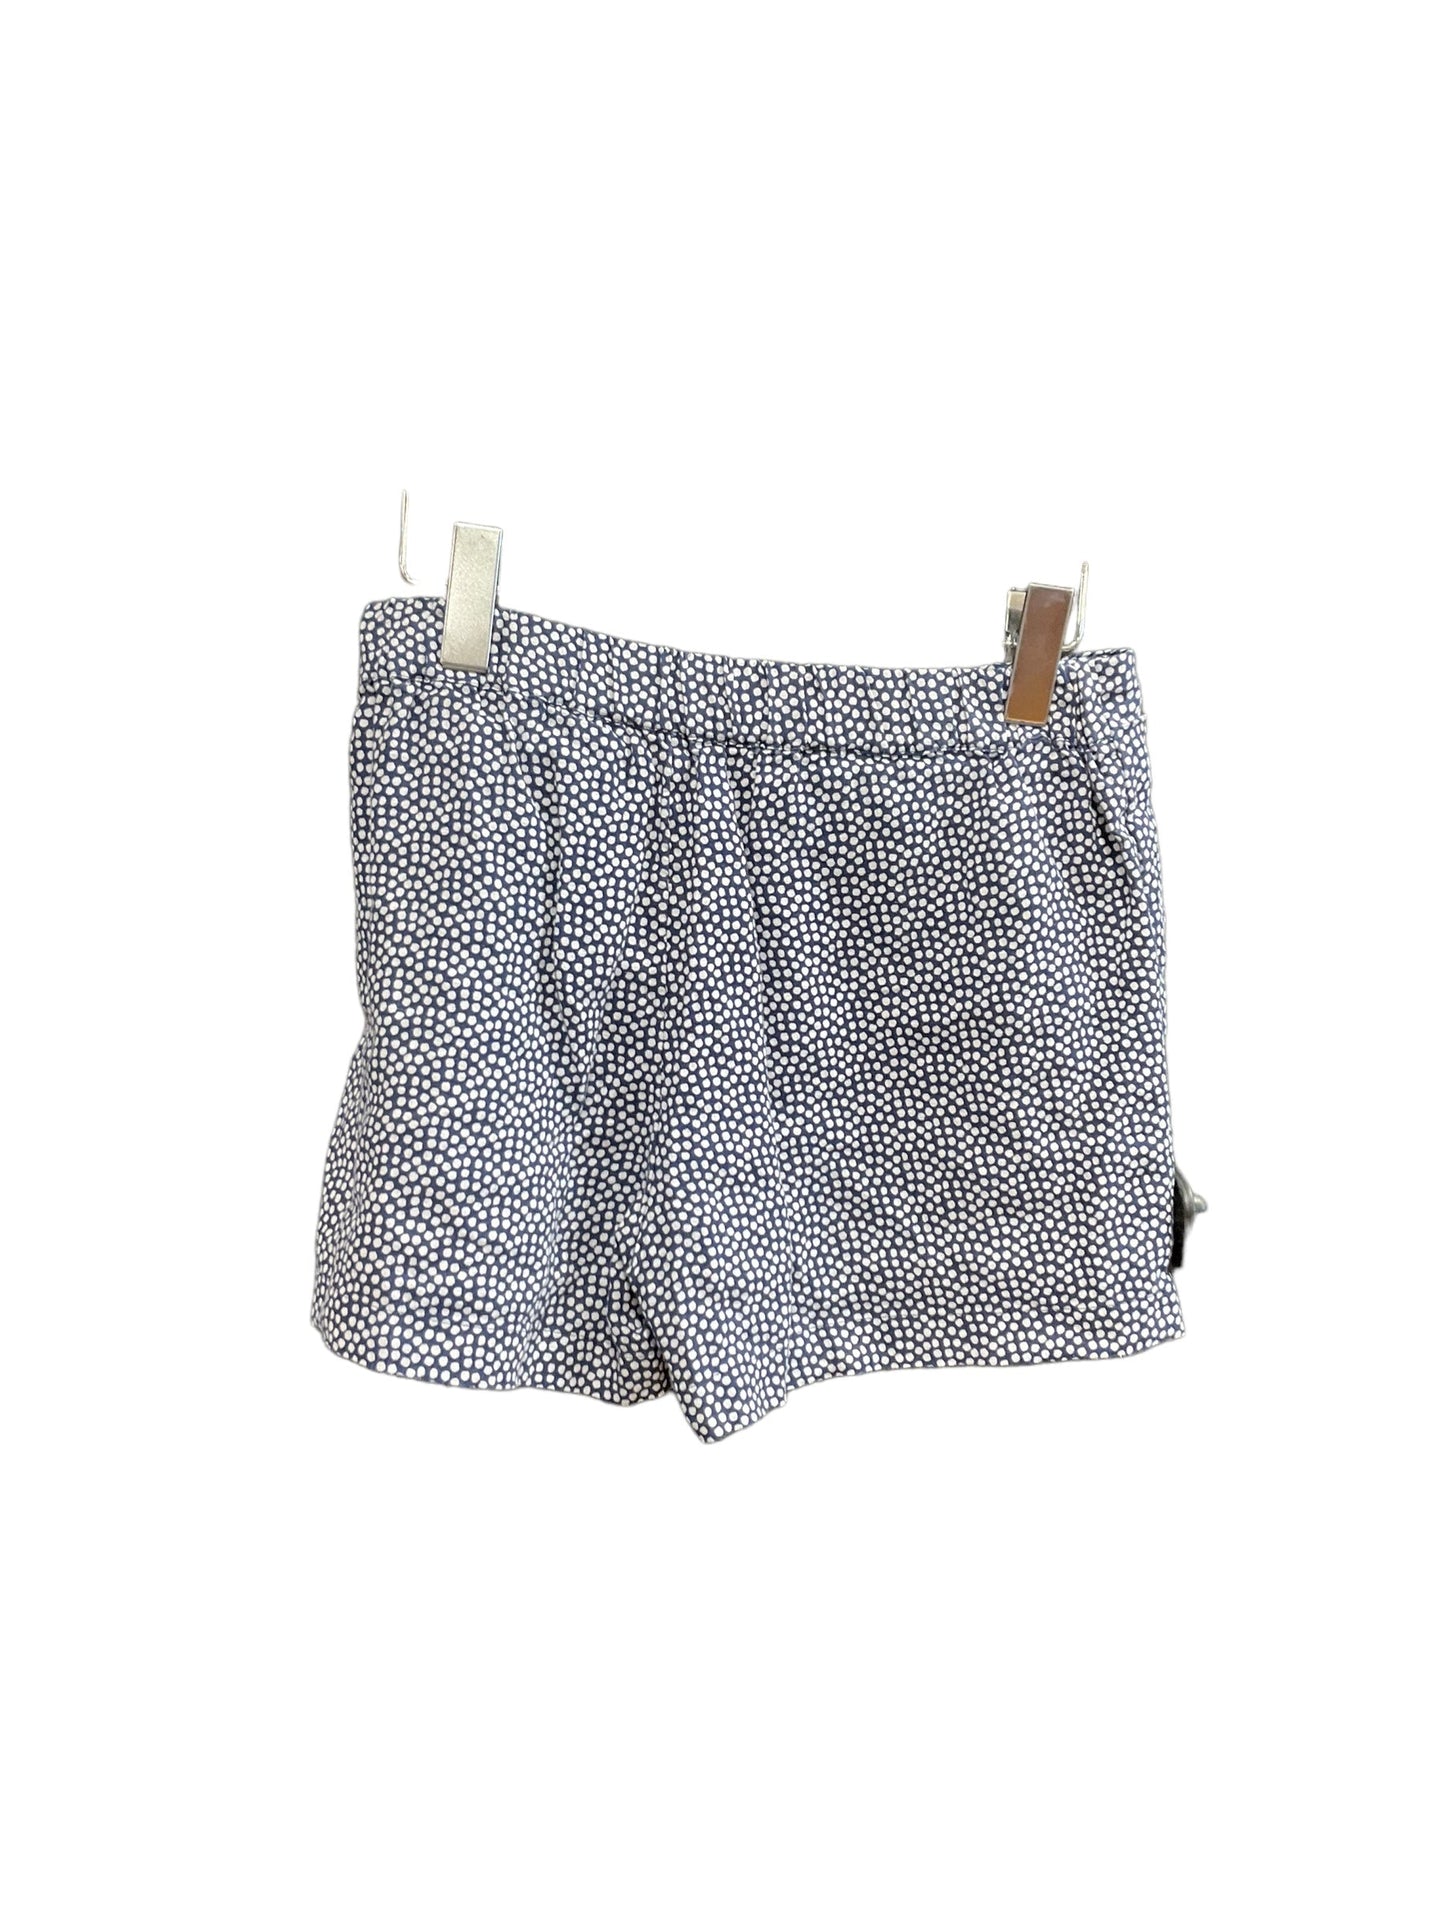 Shorts By Vineyard Vines  Size: Xs